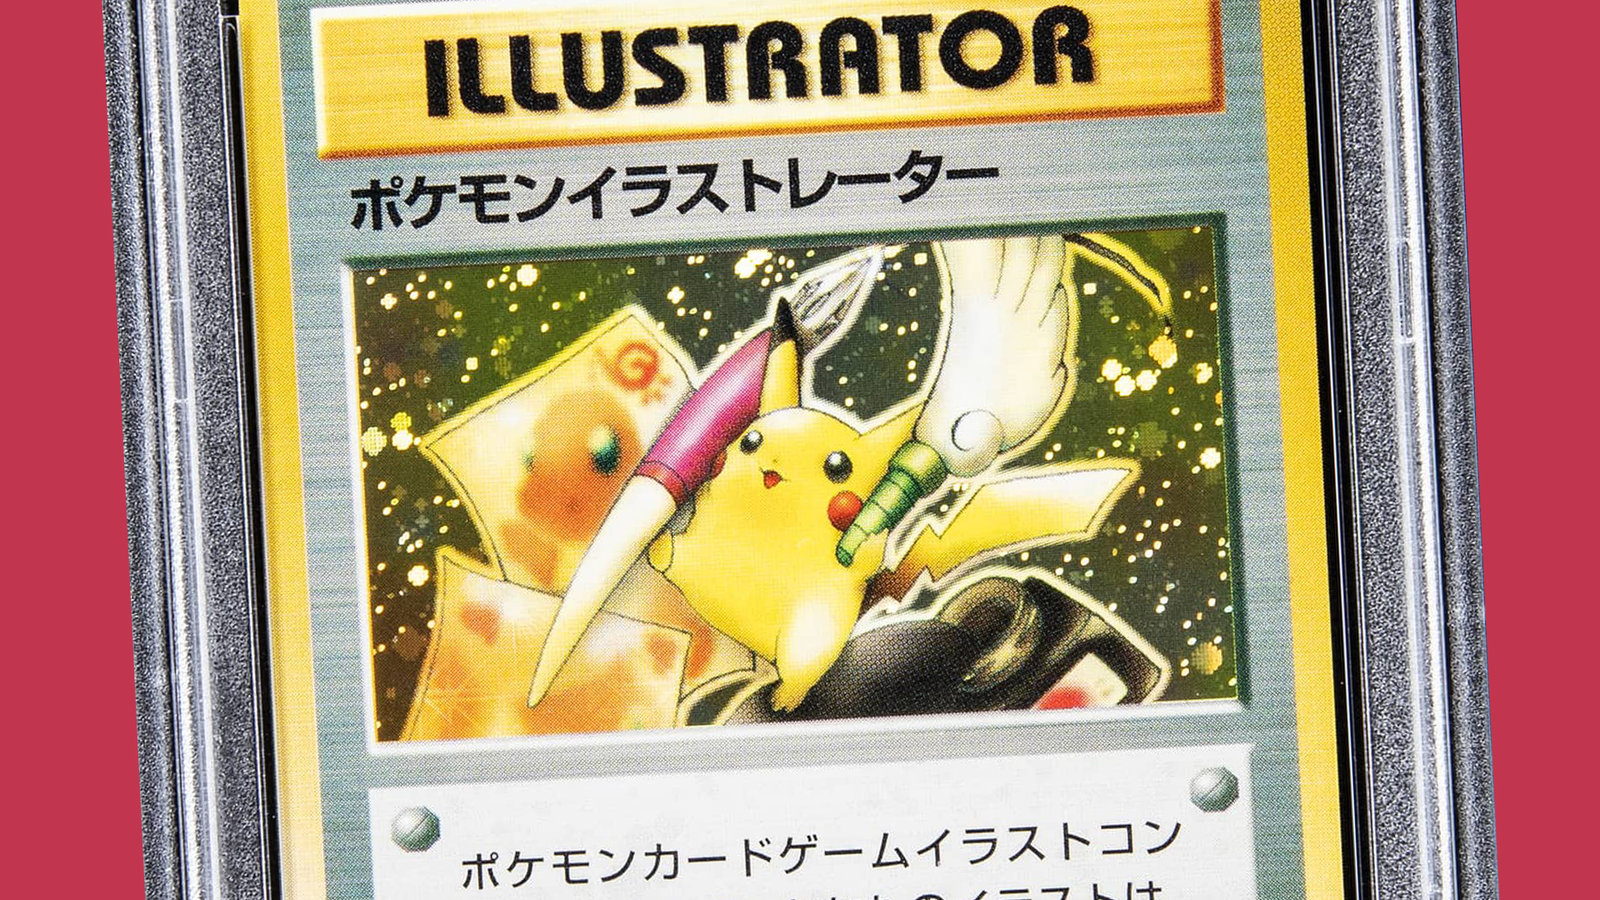 Pikachu Illustrator Pokémon Card Collectible/Gift/Display